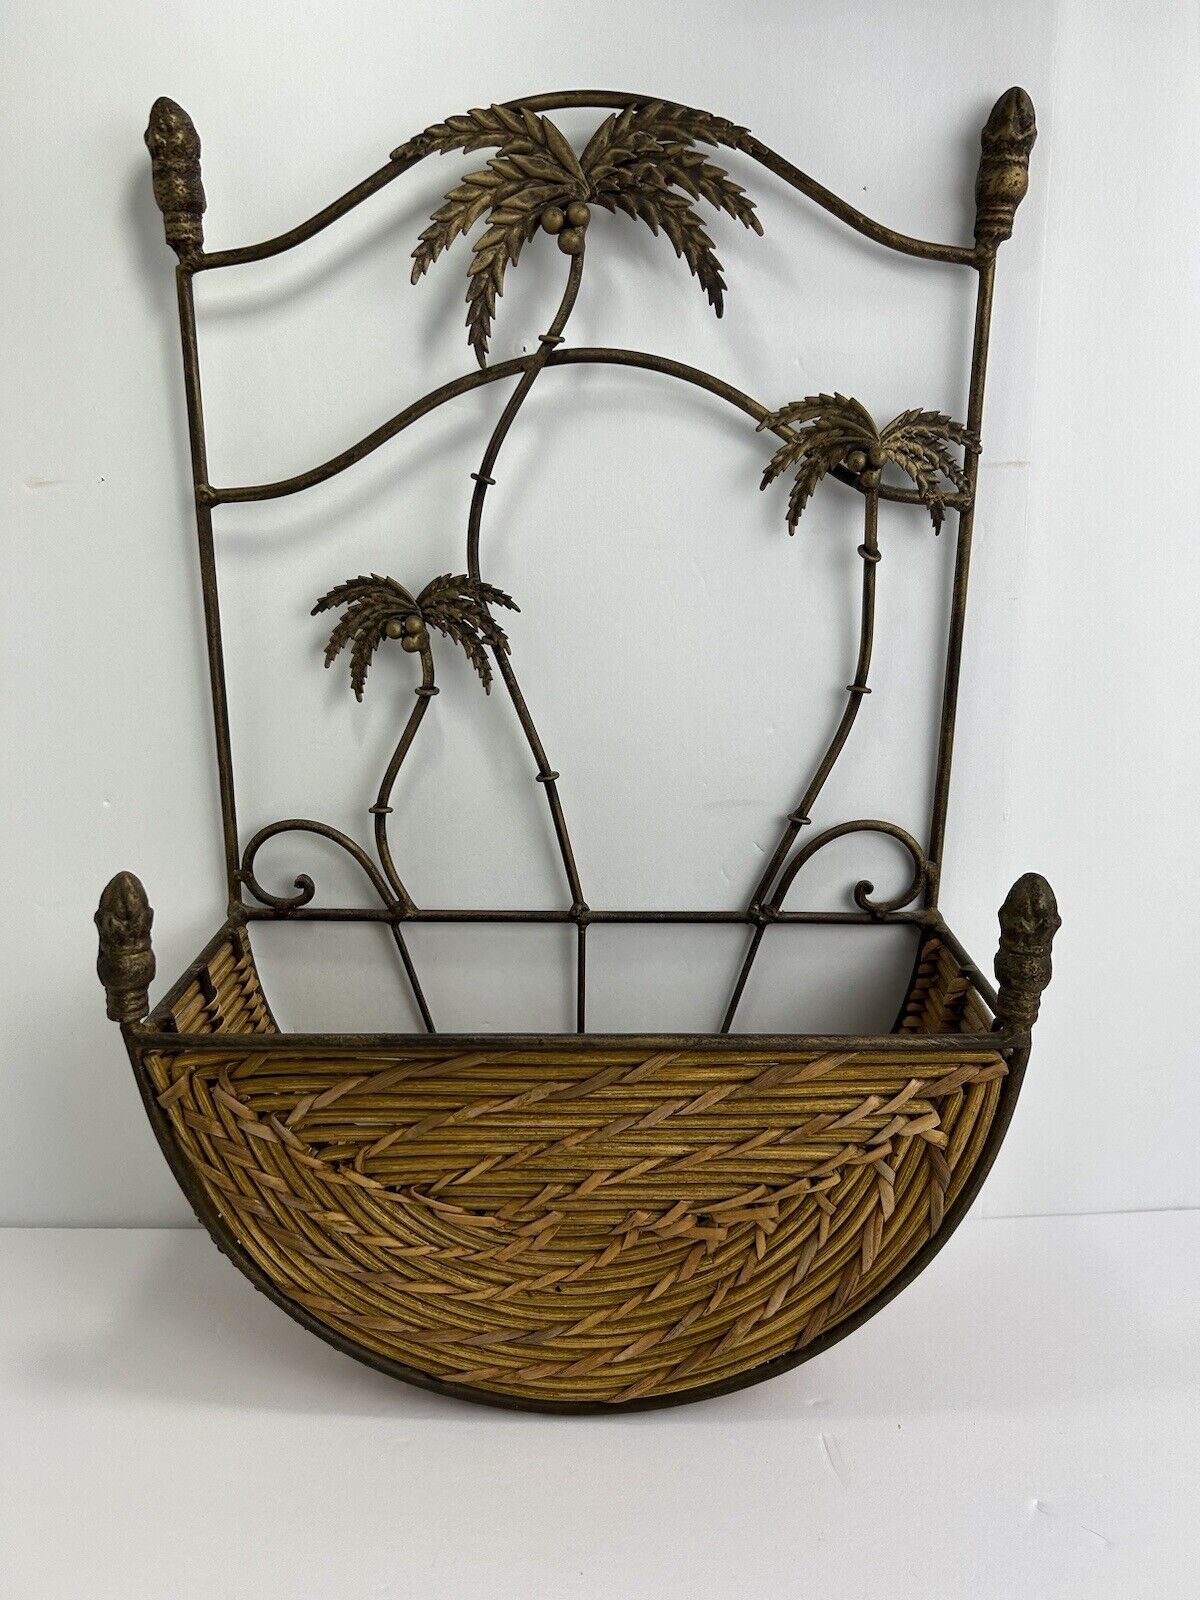 Vintage Wicker/Rattan Metal Palm Tree Wall Hanging Basket, Super Cute